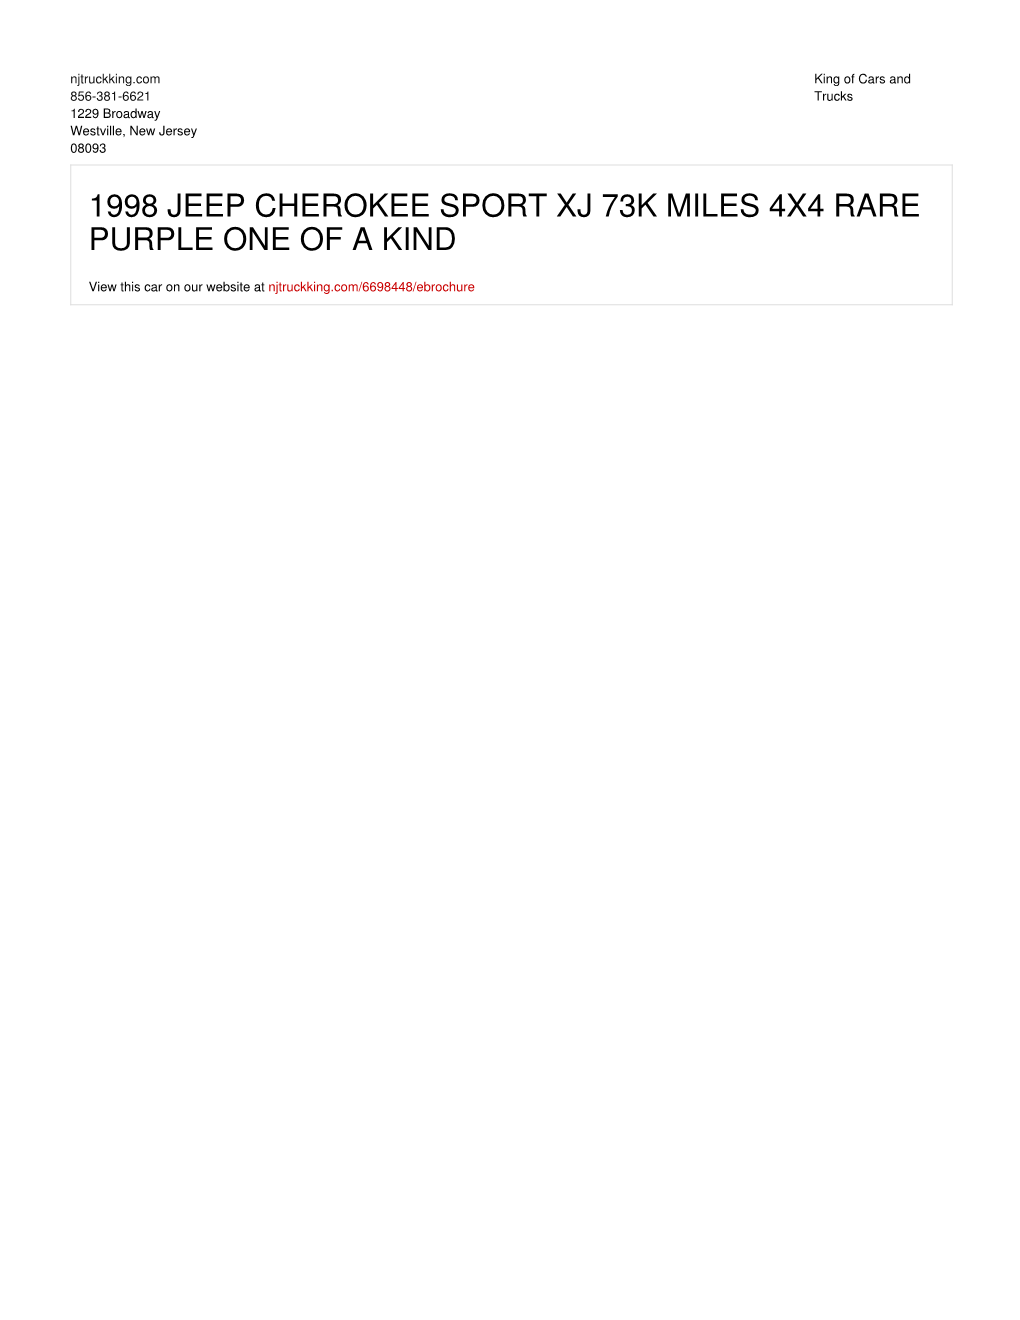 1998 Jeep Cherokee Sport Xj 73K Miles 4X4 Rare Purple One of a Kind